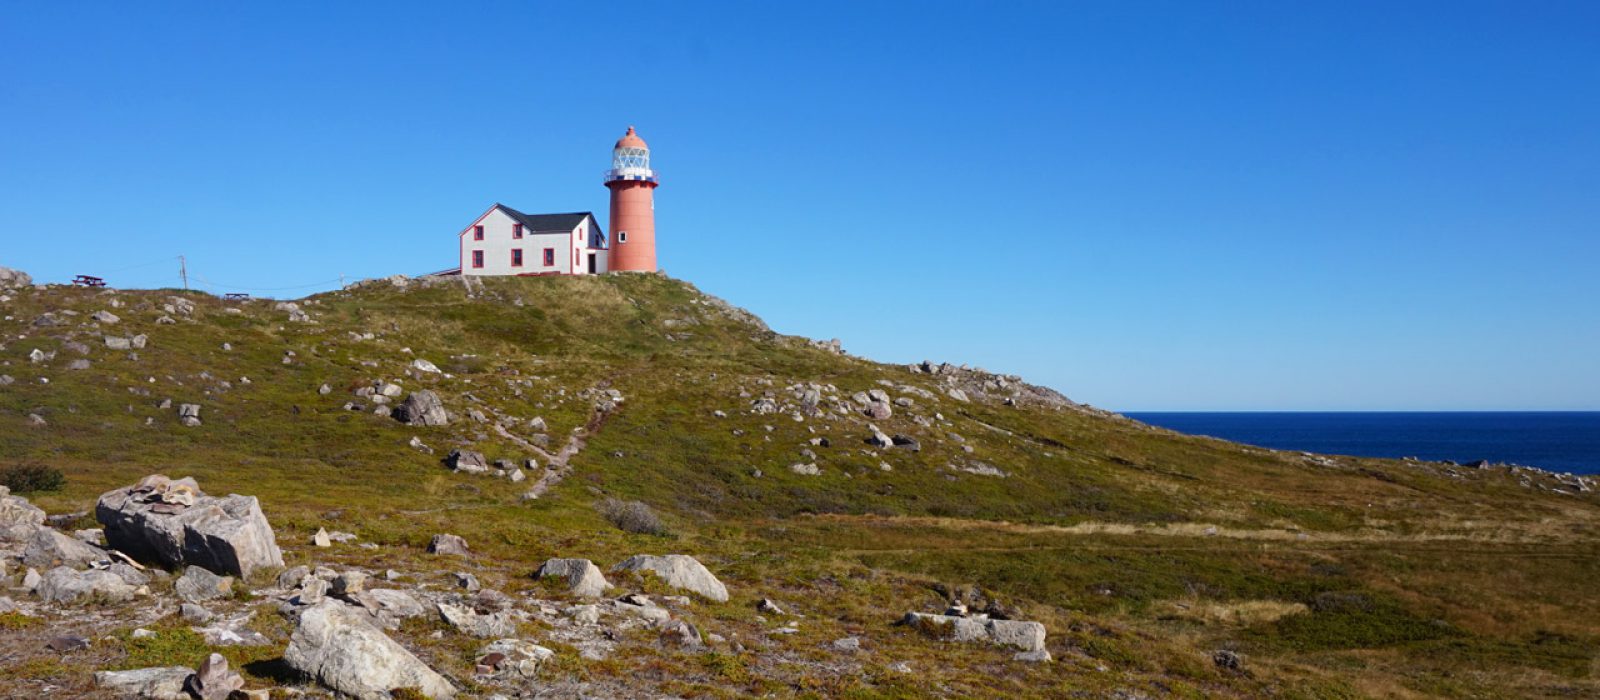 Ferryland Lighthouse on the Avalon Peninsula in Newfoundland